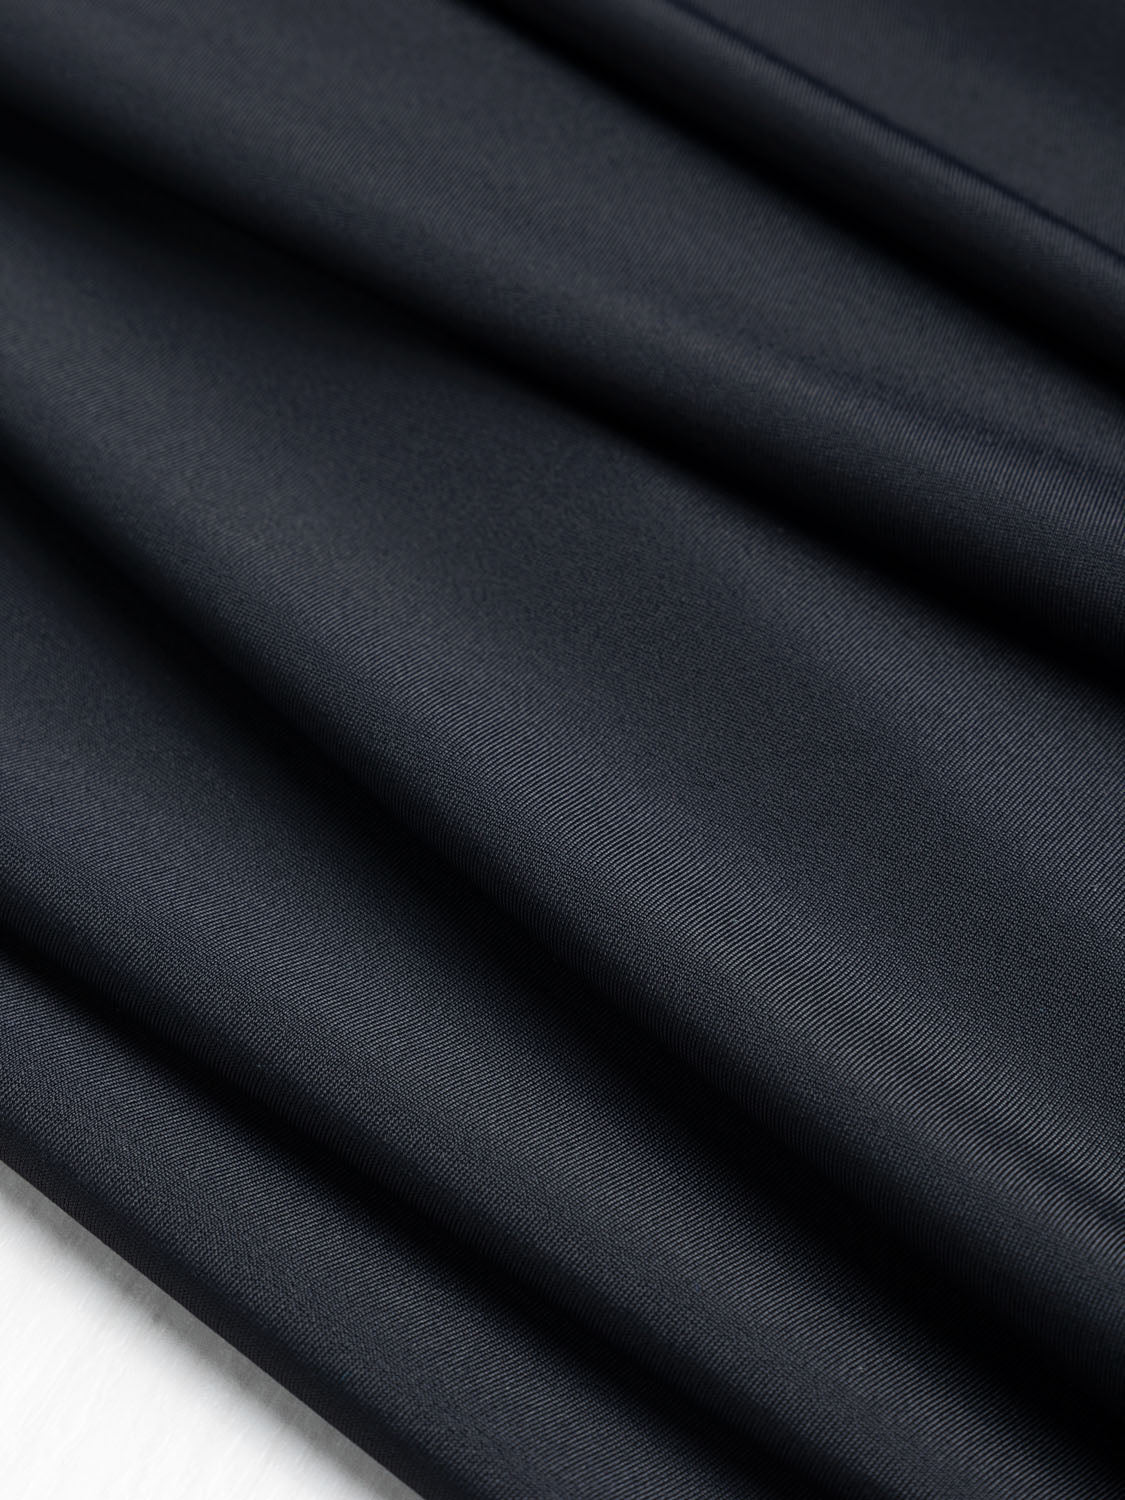 Nylon Spandex Fabric, Shiny, Swimwear Fabric